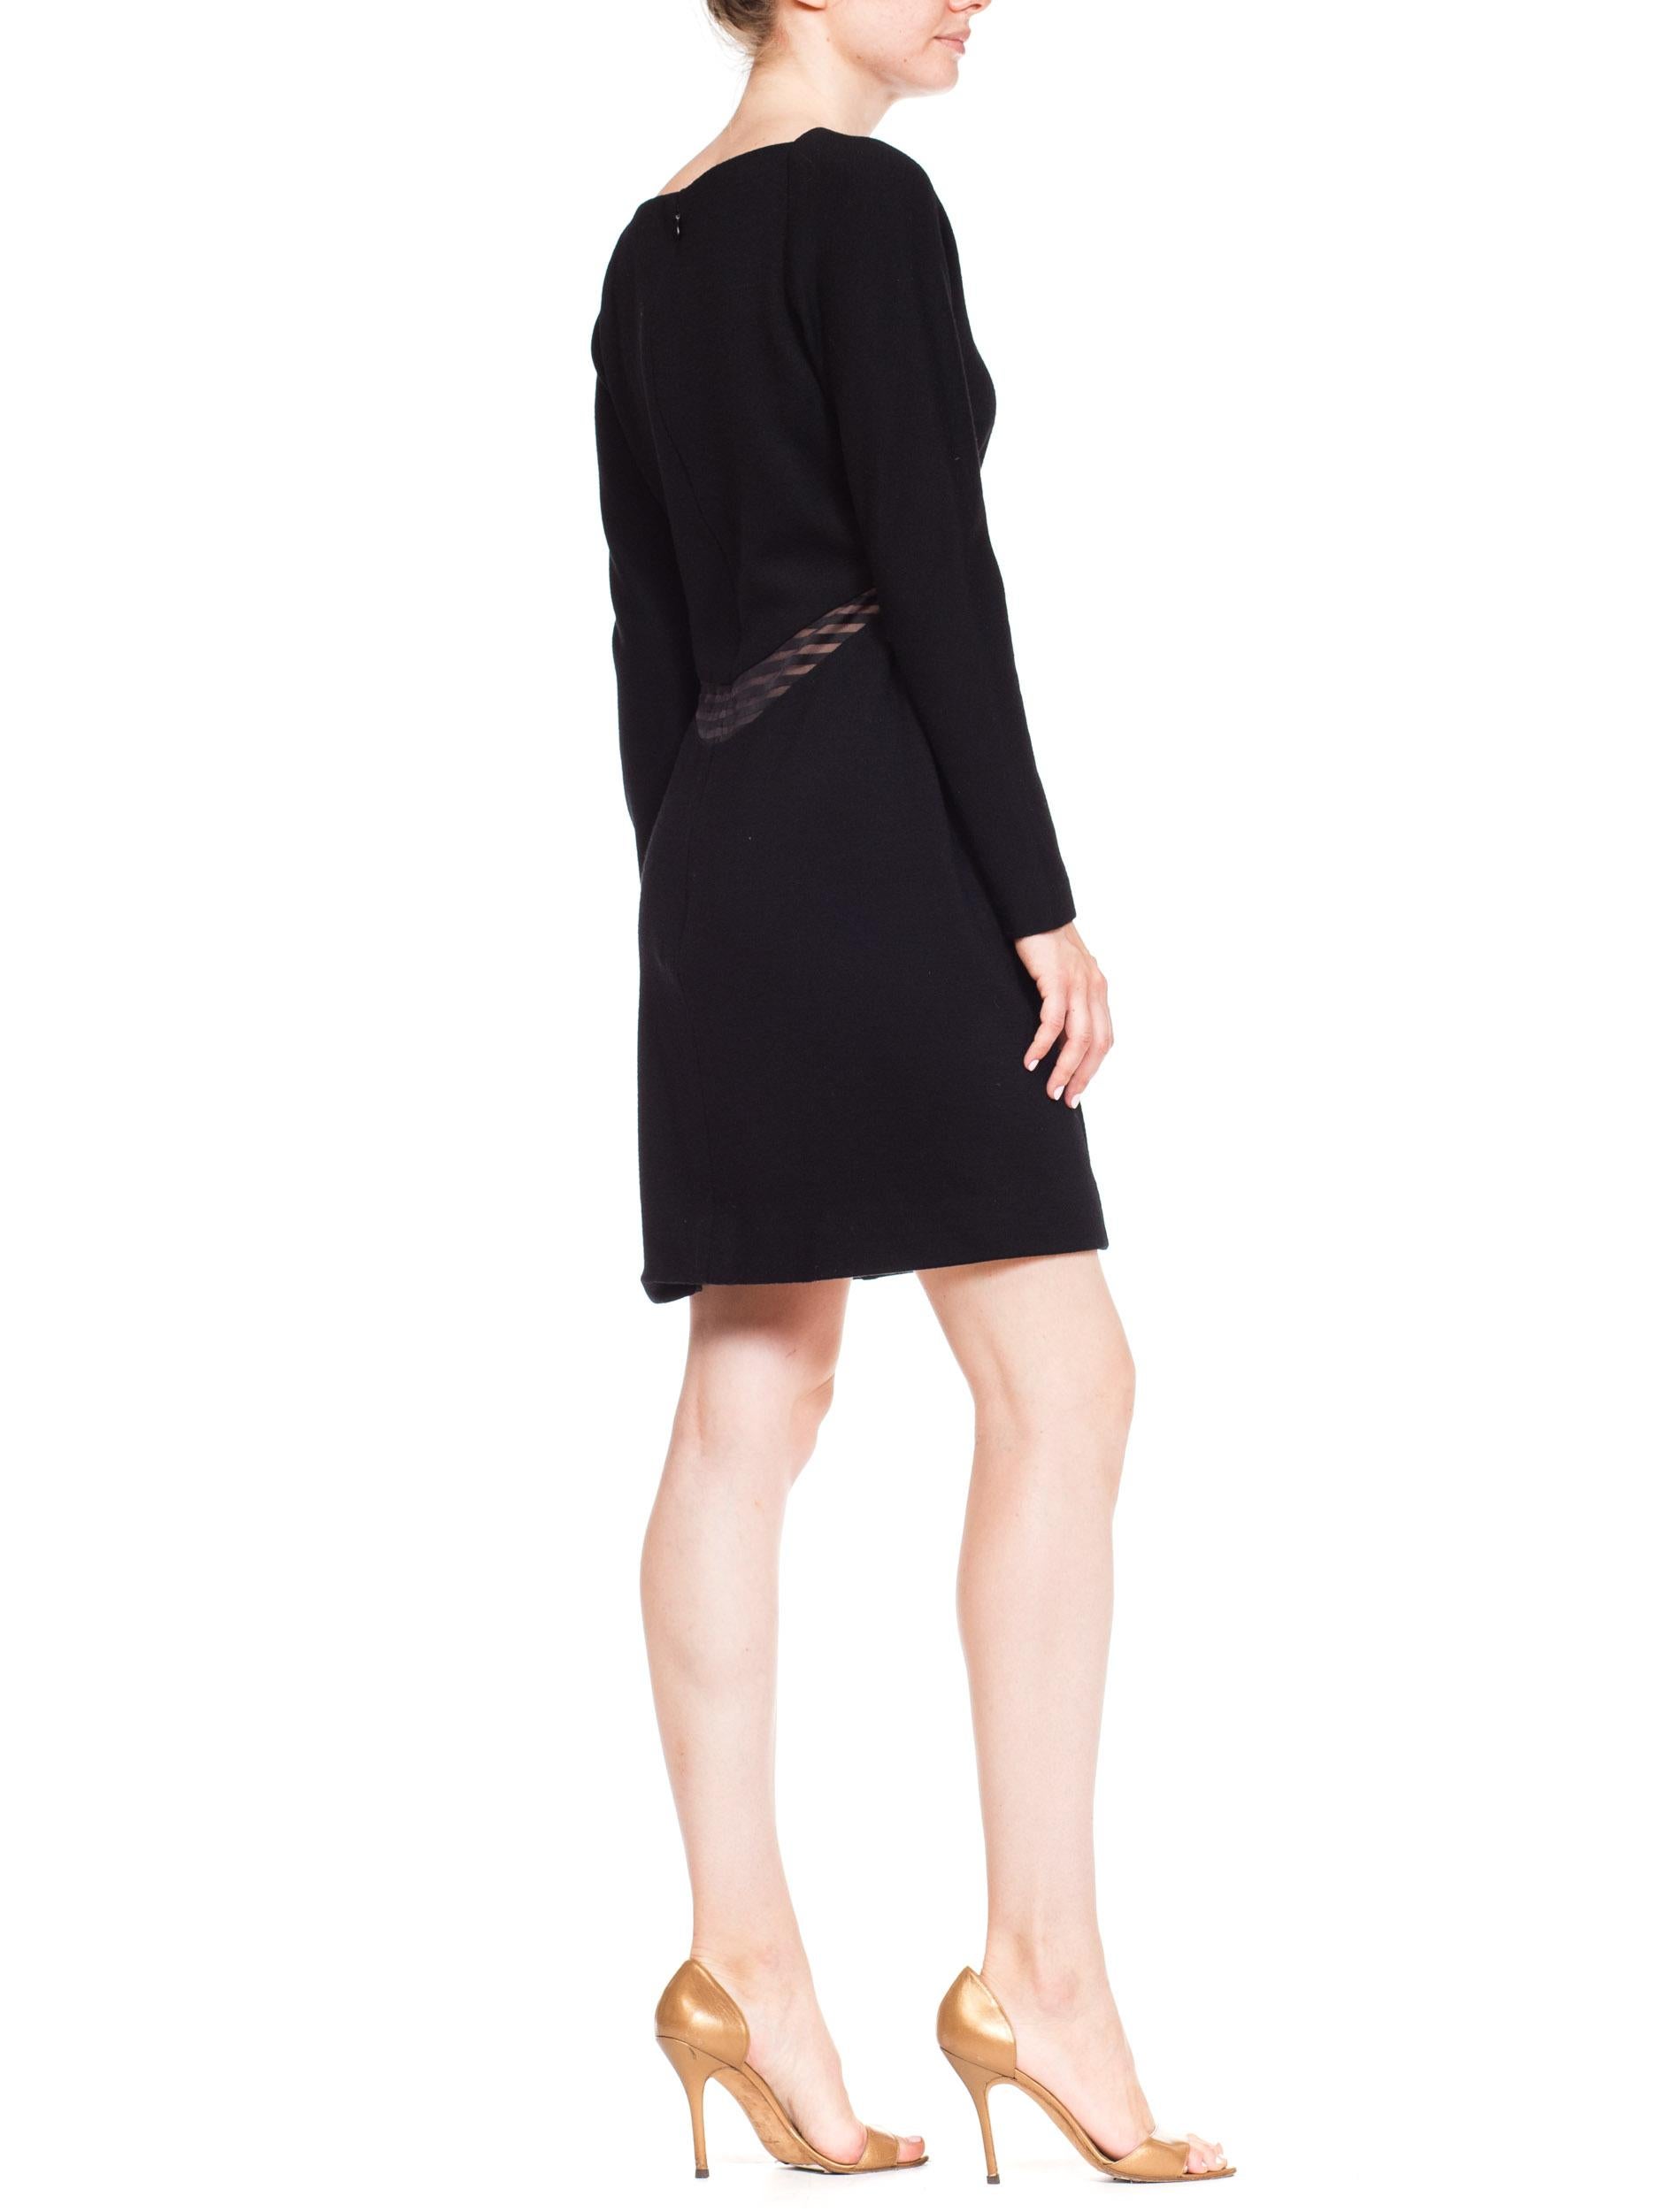 1990S GEOFFREY BEENE Black Wool Jersey Long Sleeve  Dress With Sheer Striped Pa For Sale 1